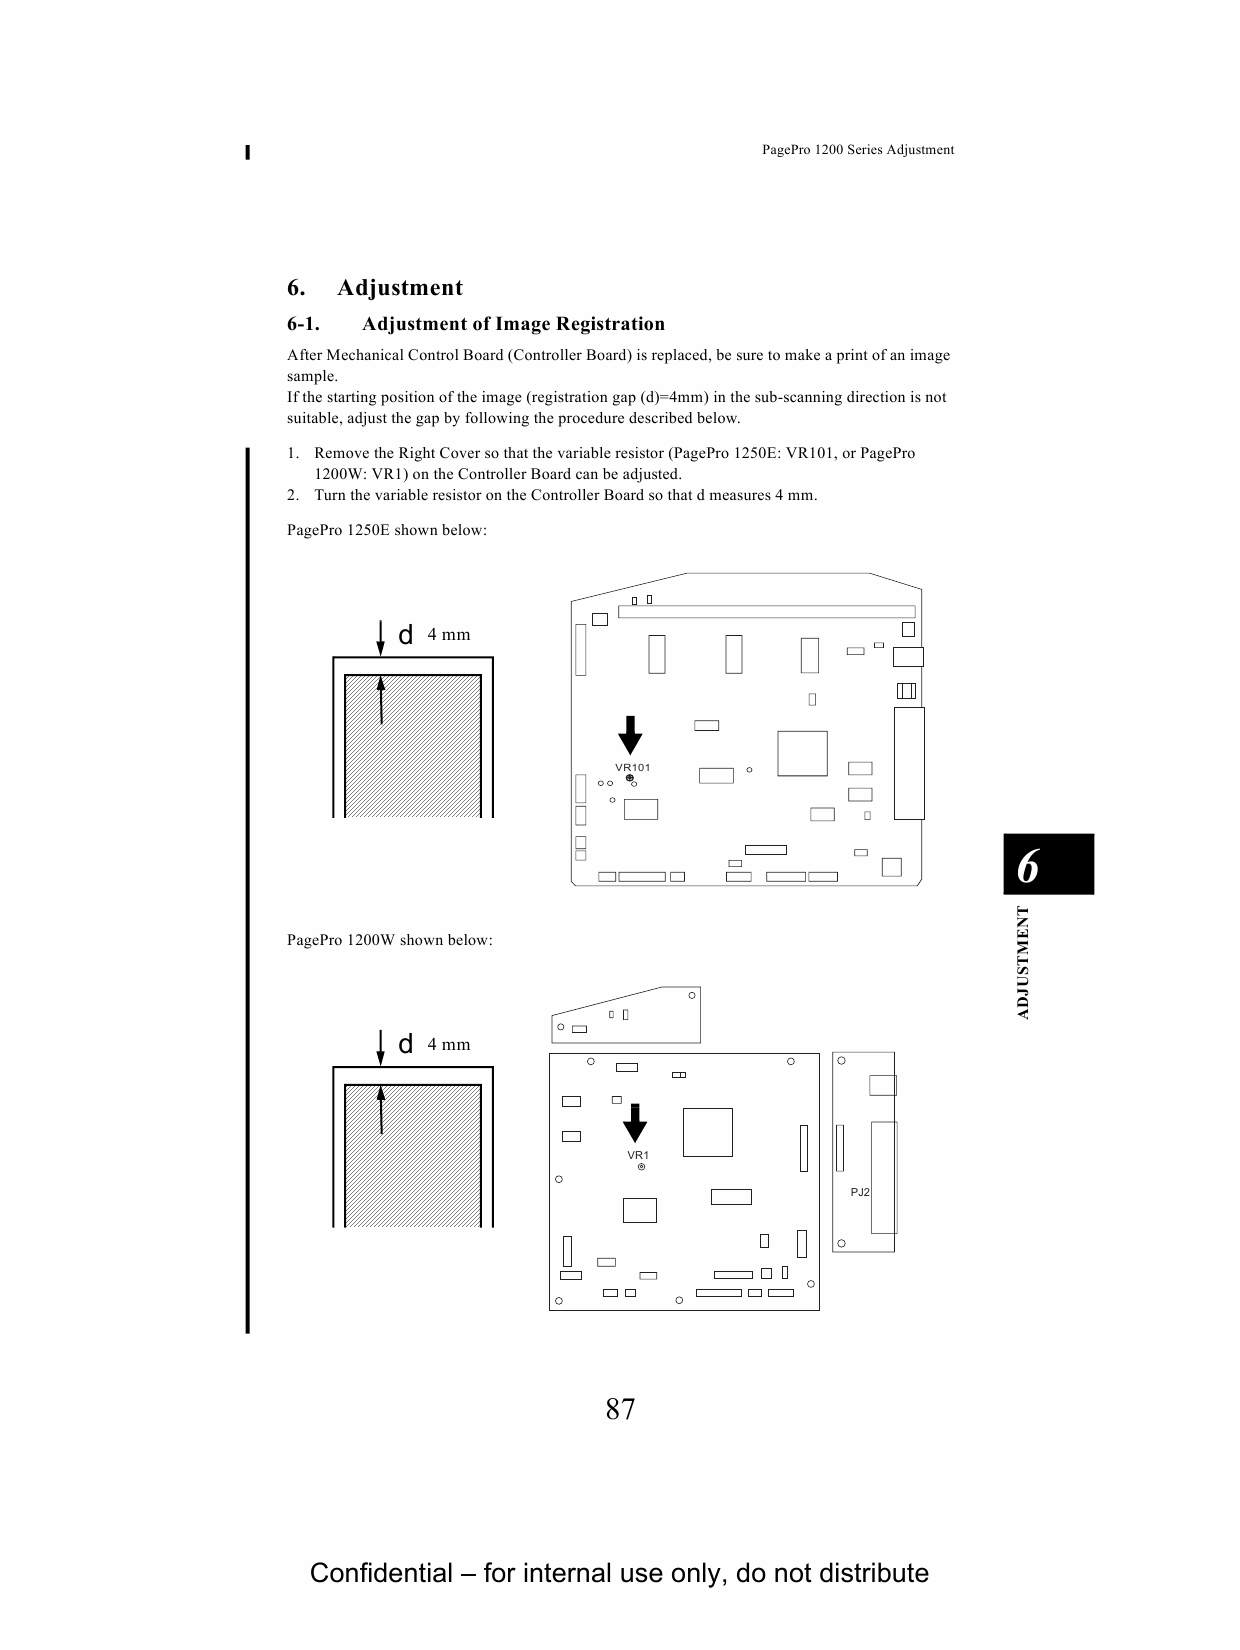 Konica-Minolta pagepro 1200 Service Manual-4